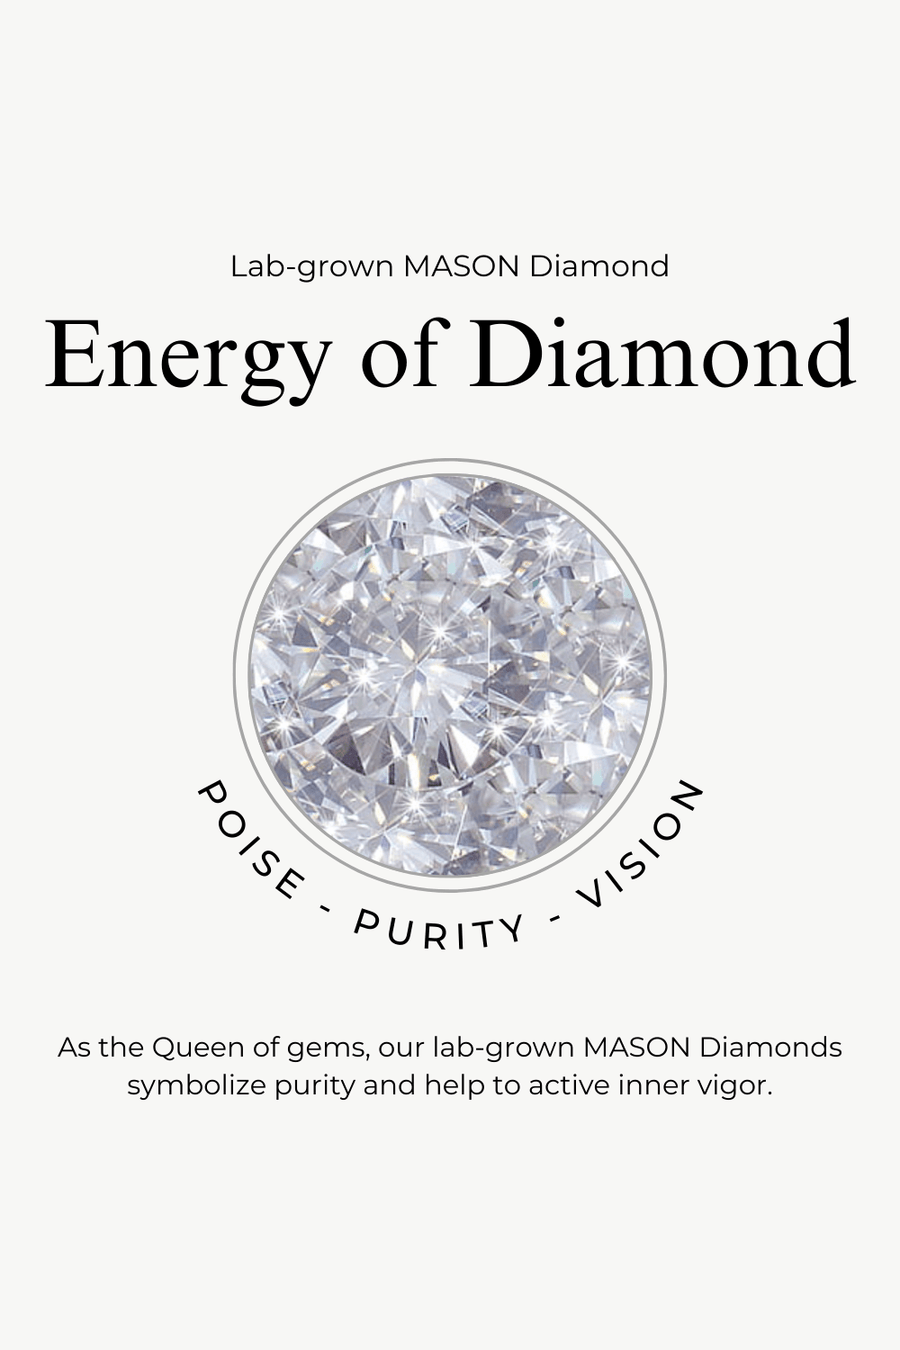 1 Carat Round Diamond Pendant Necklace - Chance to Charm